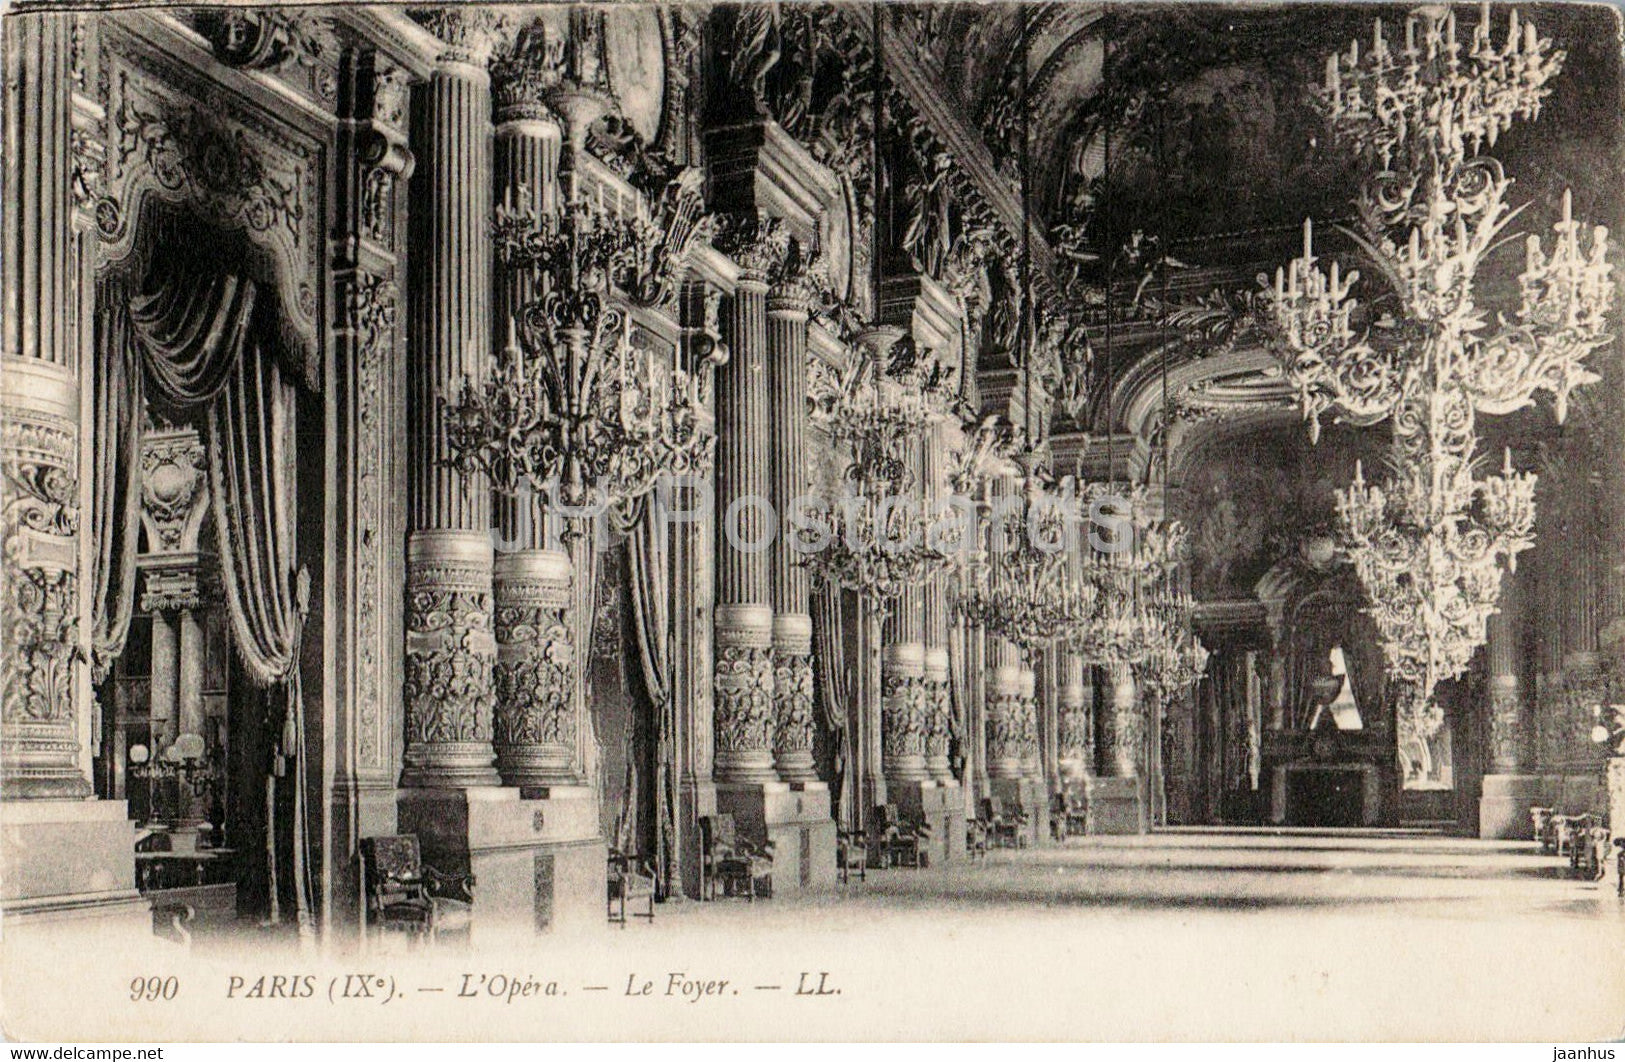 Paris - L'Opera - Le Foyer - theatre - 990 - old postcard - 1913 - France - used - JH Postcards